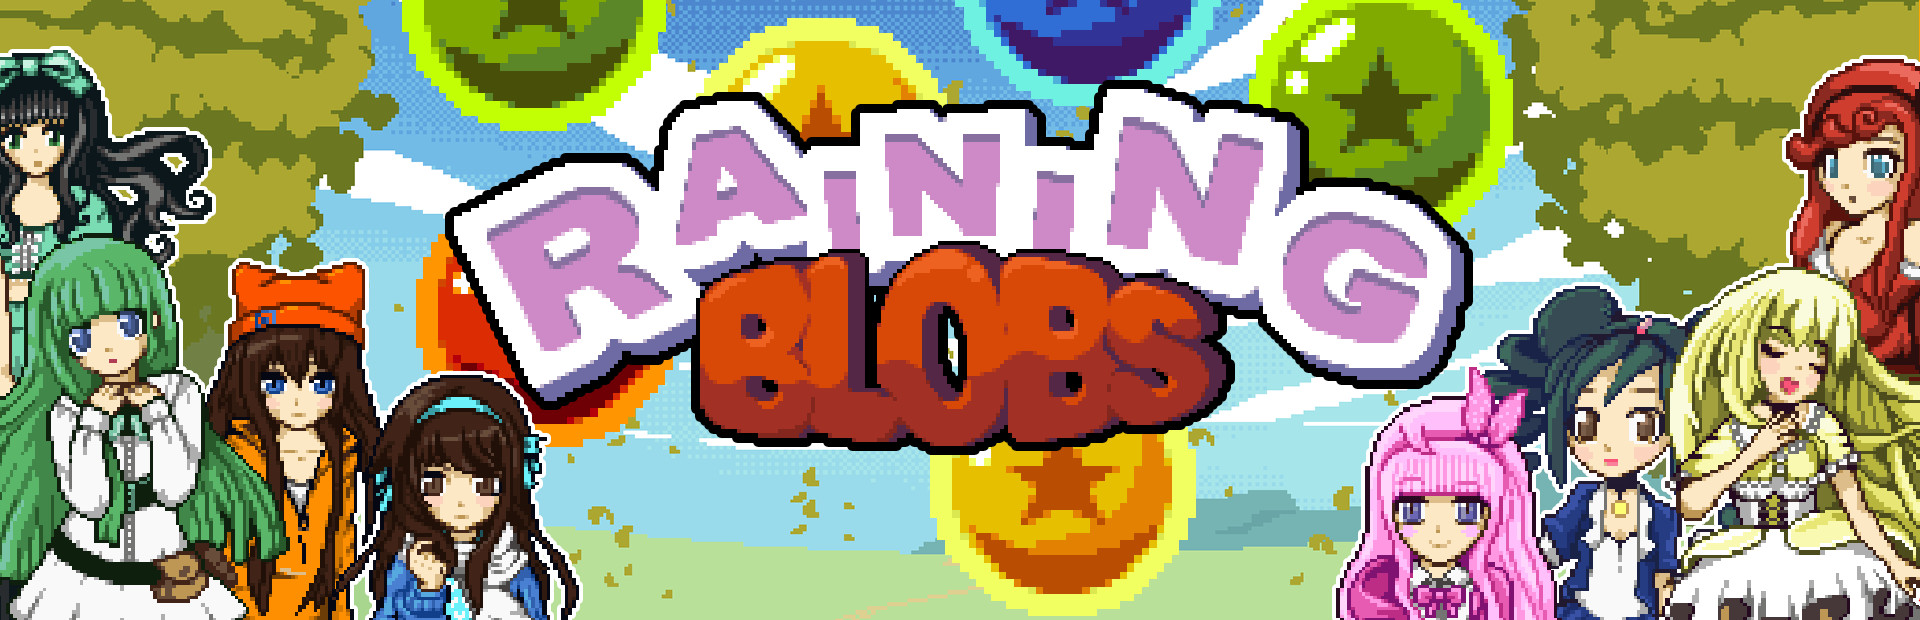 Raining Blobs cover image